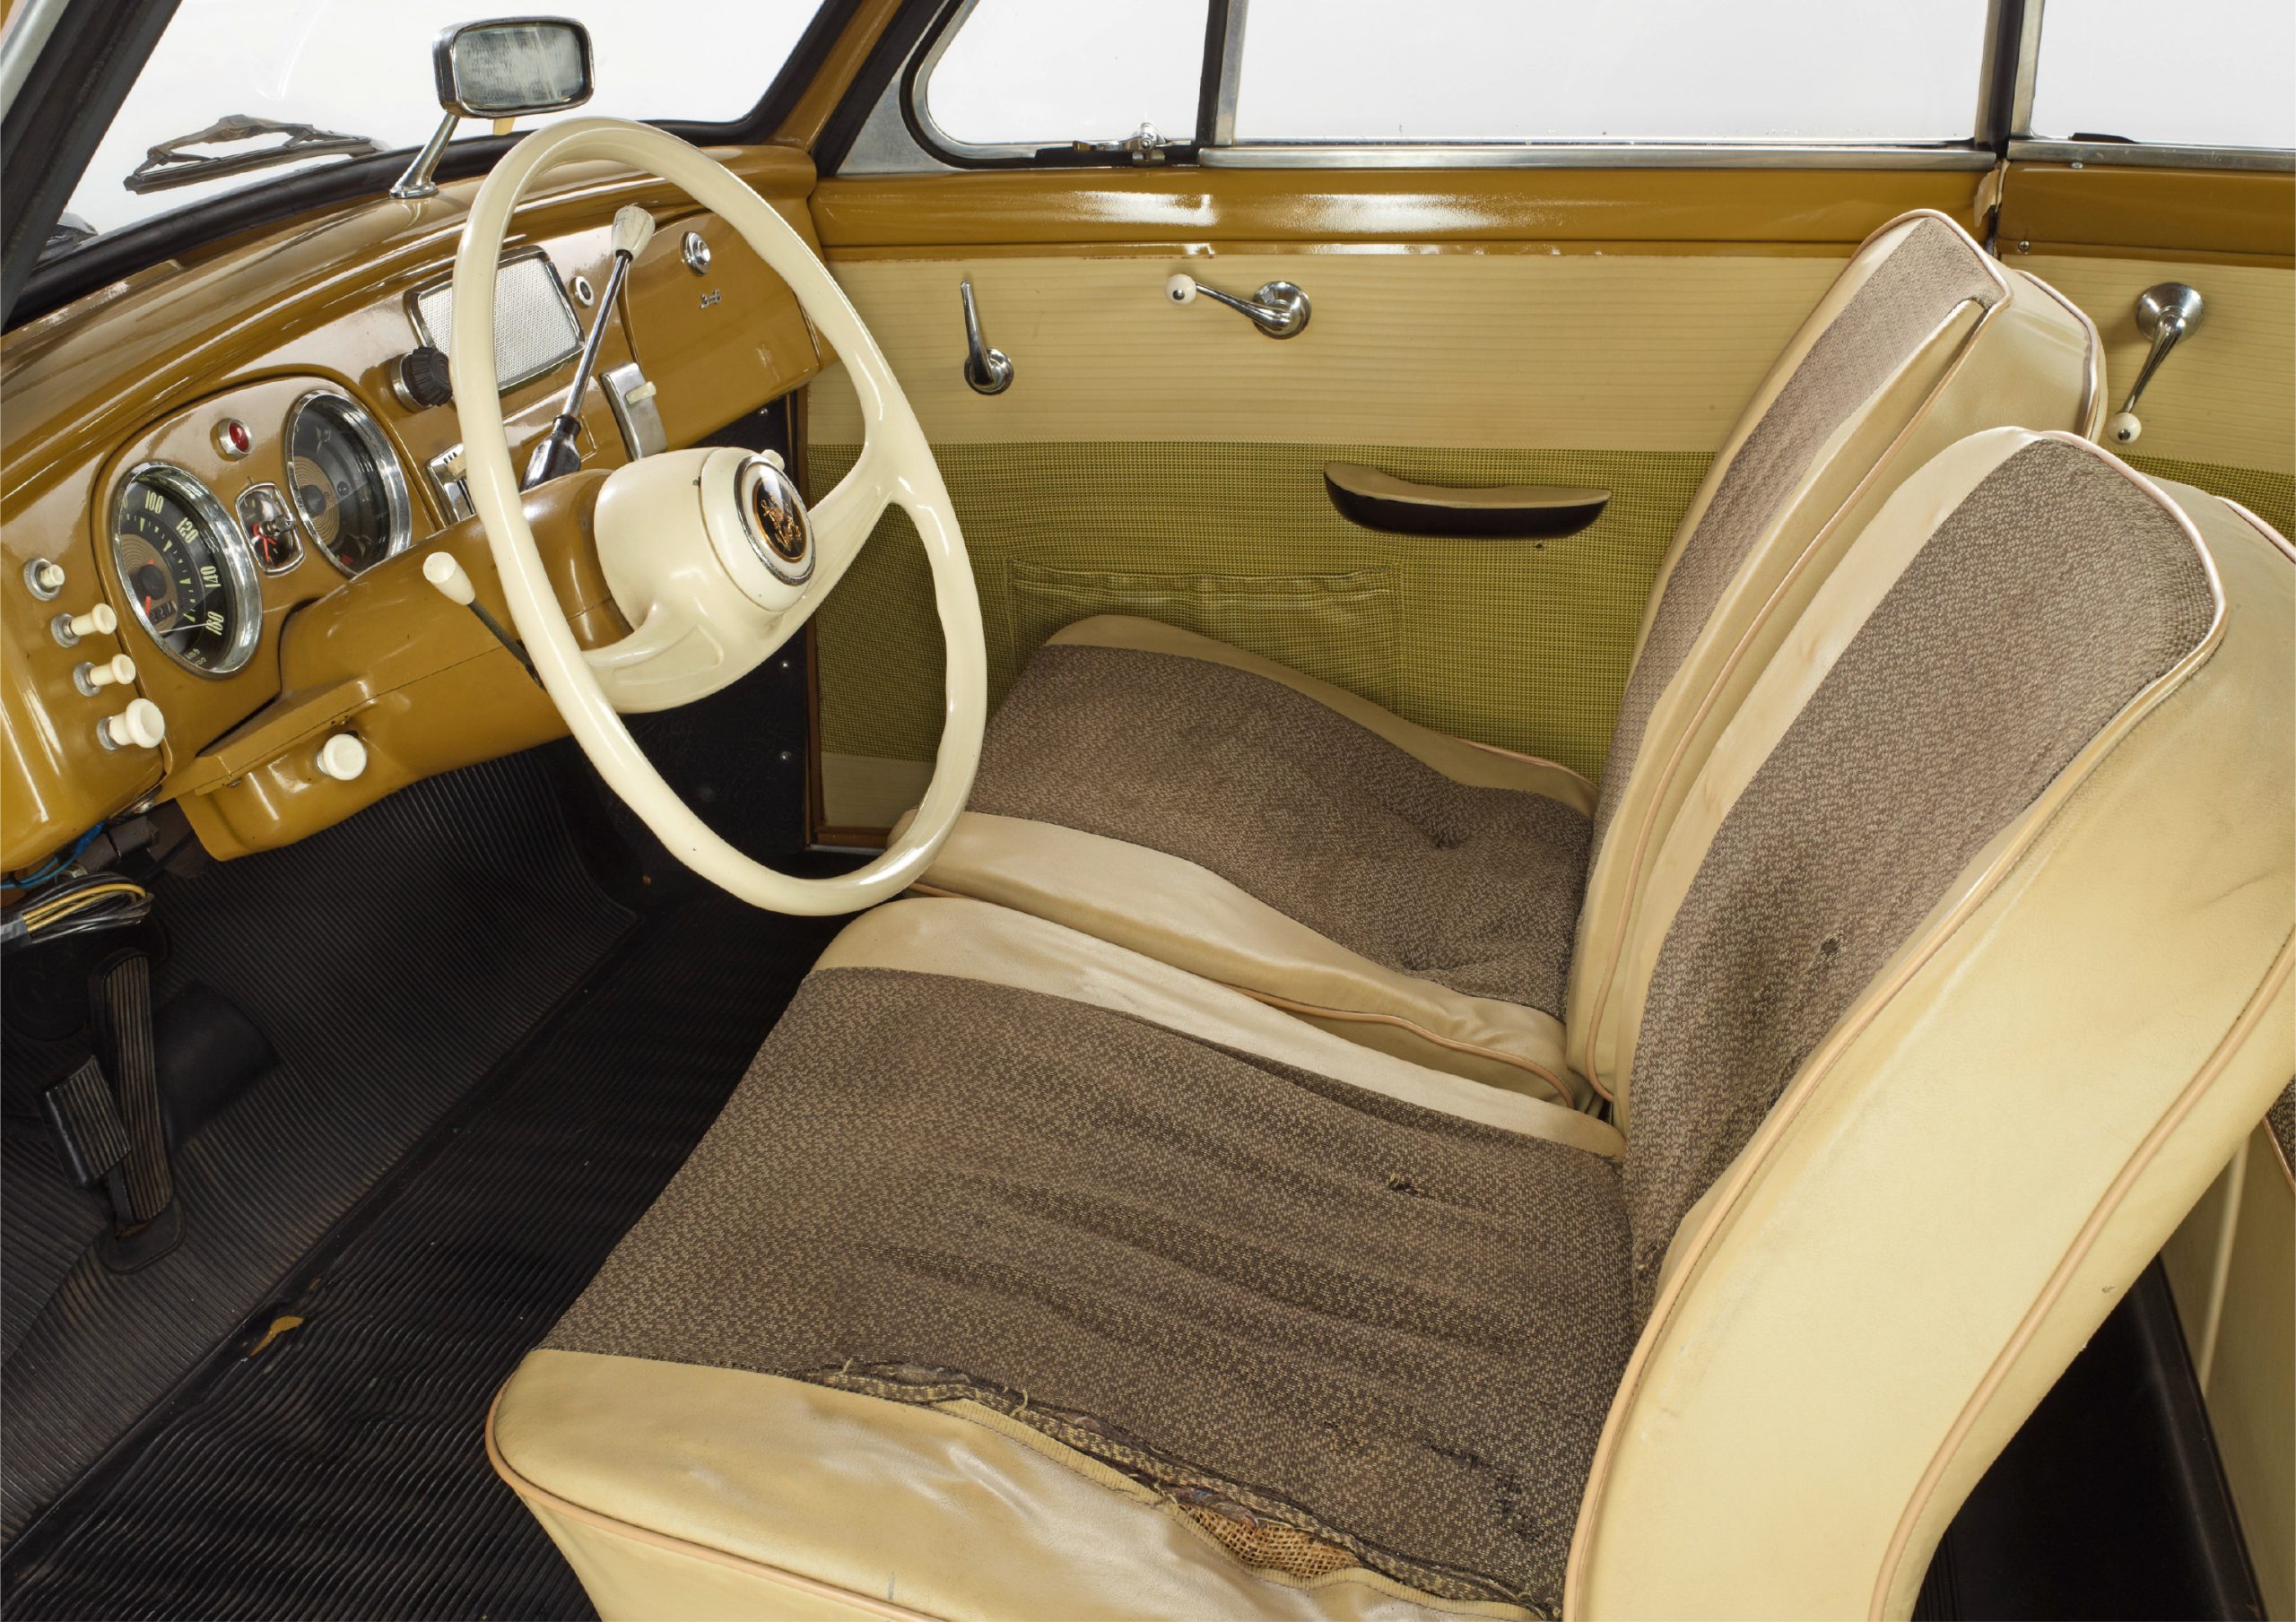 Auto UNION 1,000 of Kolaha Collection Vintage Cars